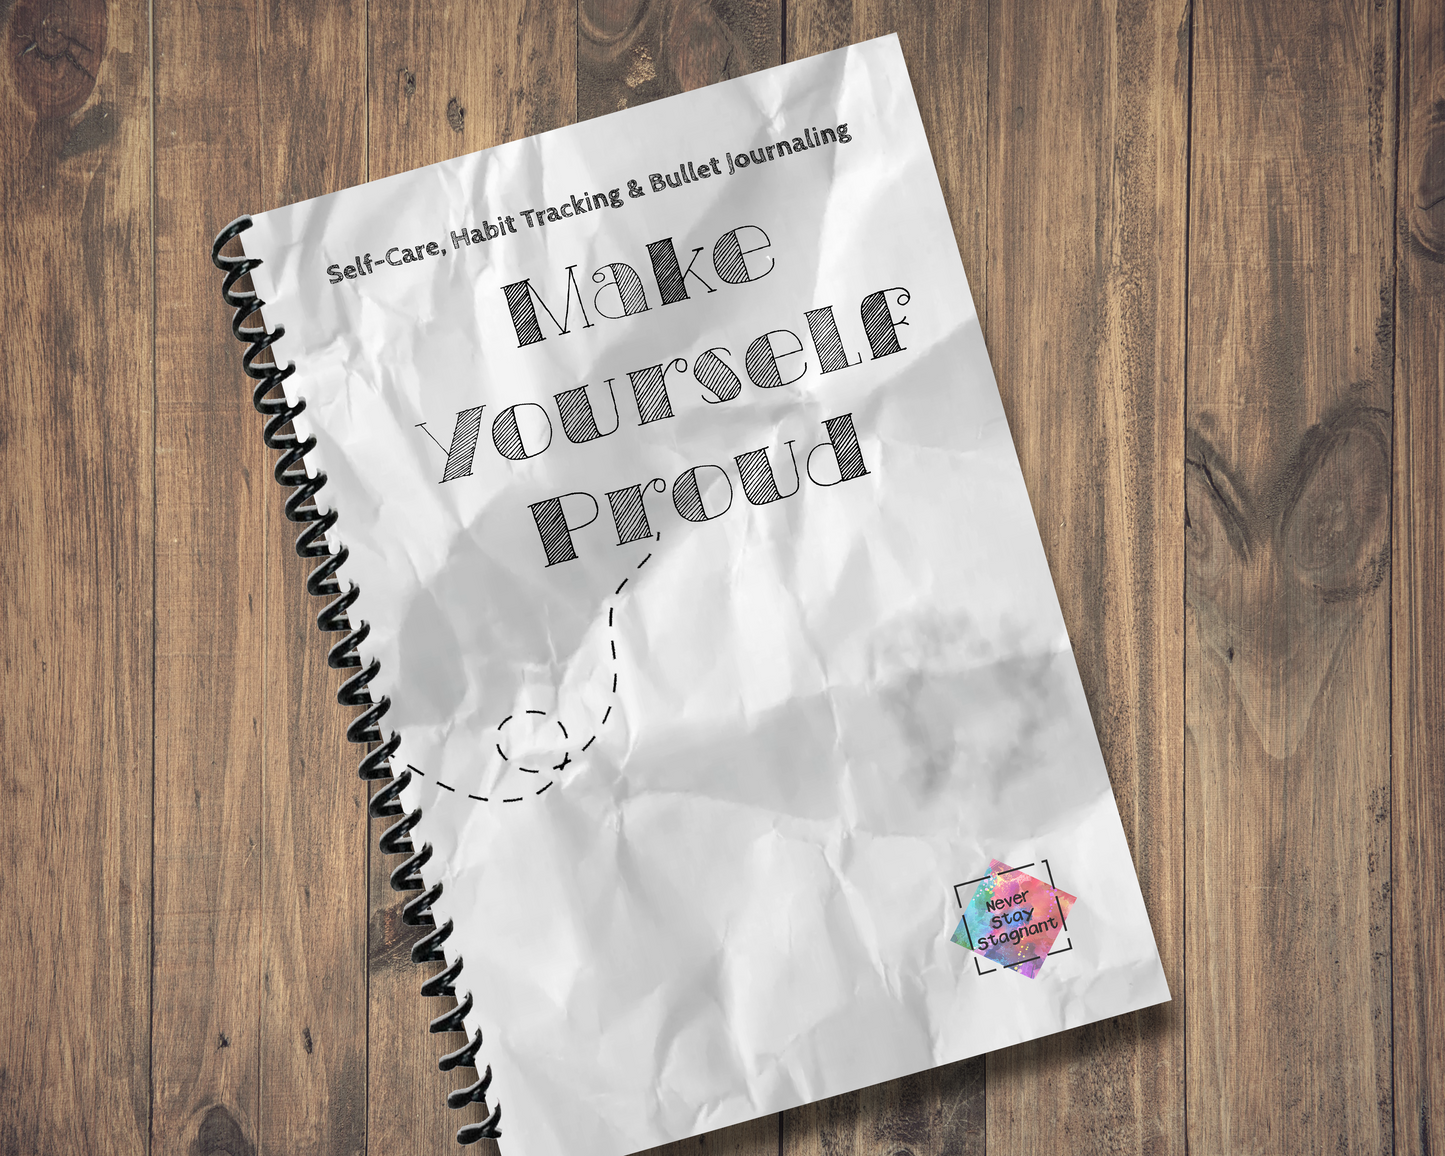 Make Yourself Proud: An Interactive Self-Improvement Journal